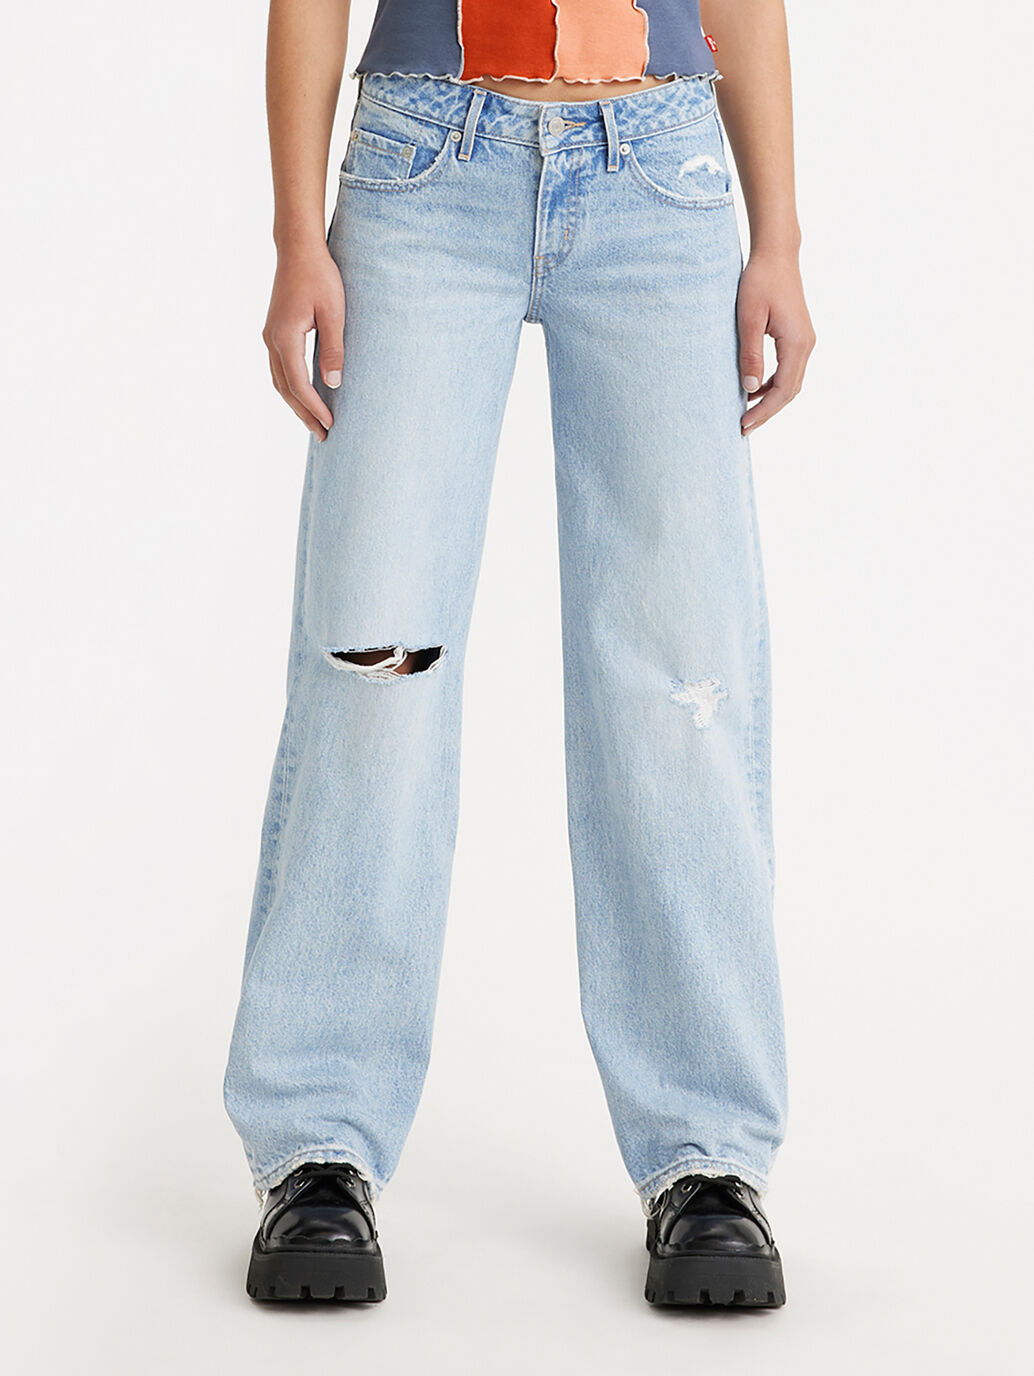 Medium Blue Low Loose Jeans For Women - Non-Stretch Denim